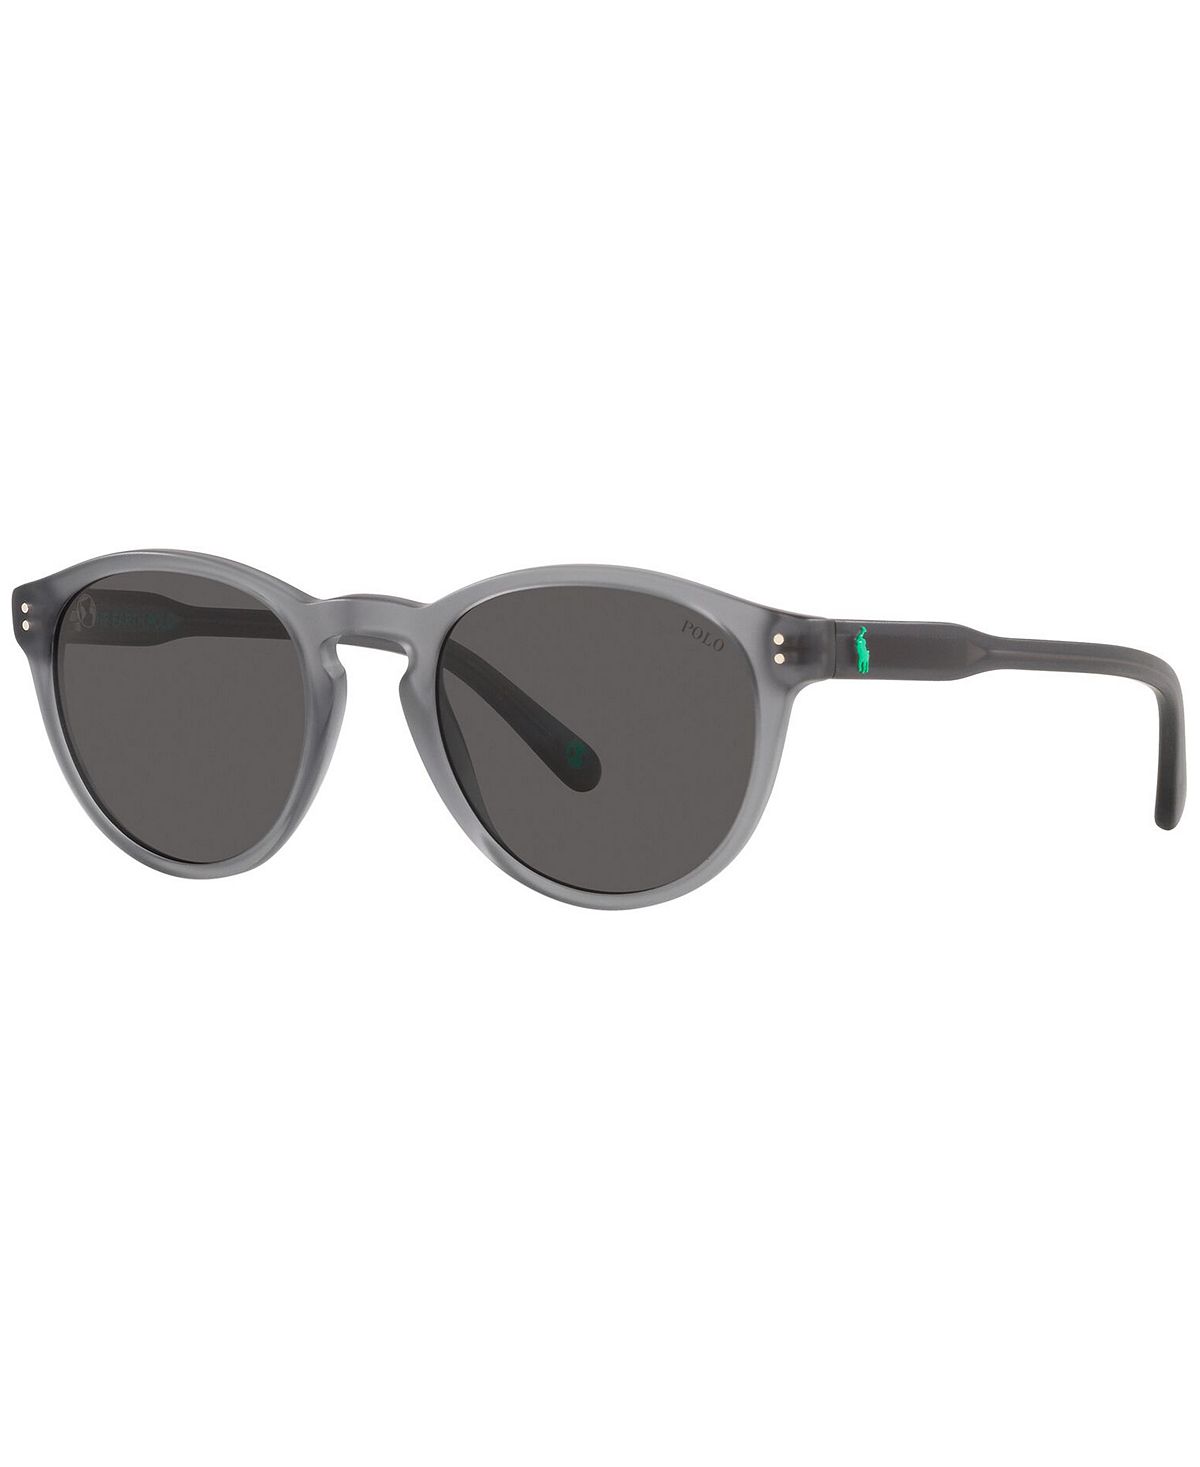 Мужские солнцезащитные очки, PH4172 50 Polo Ralph Lauren цена и фото